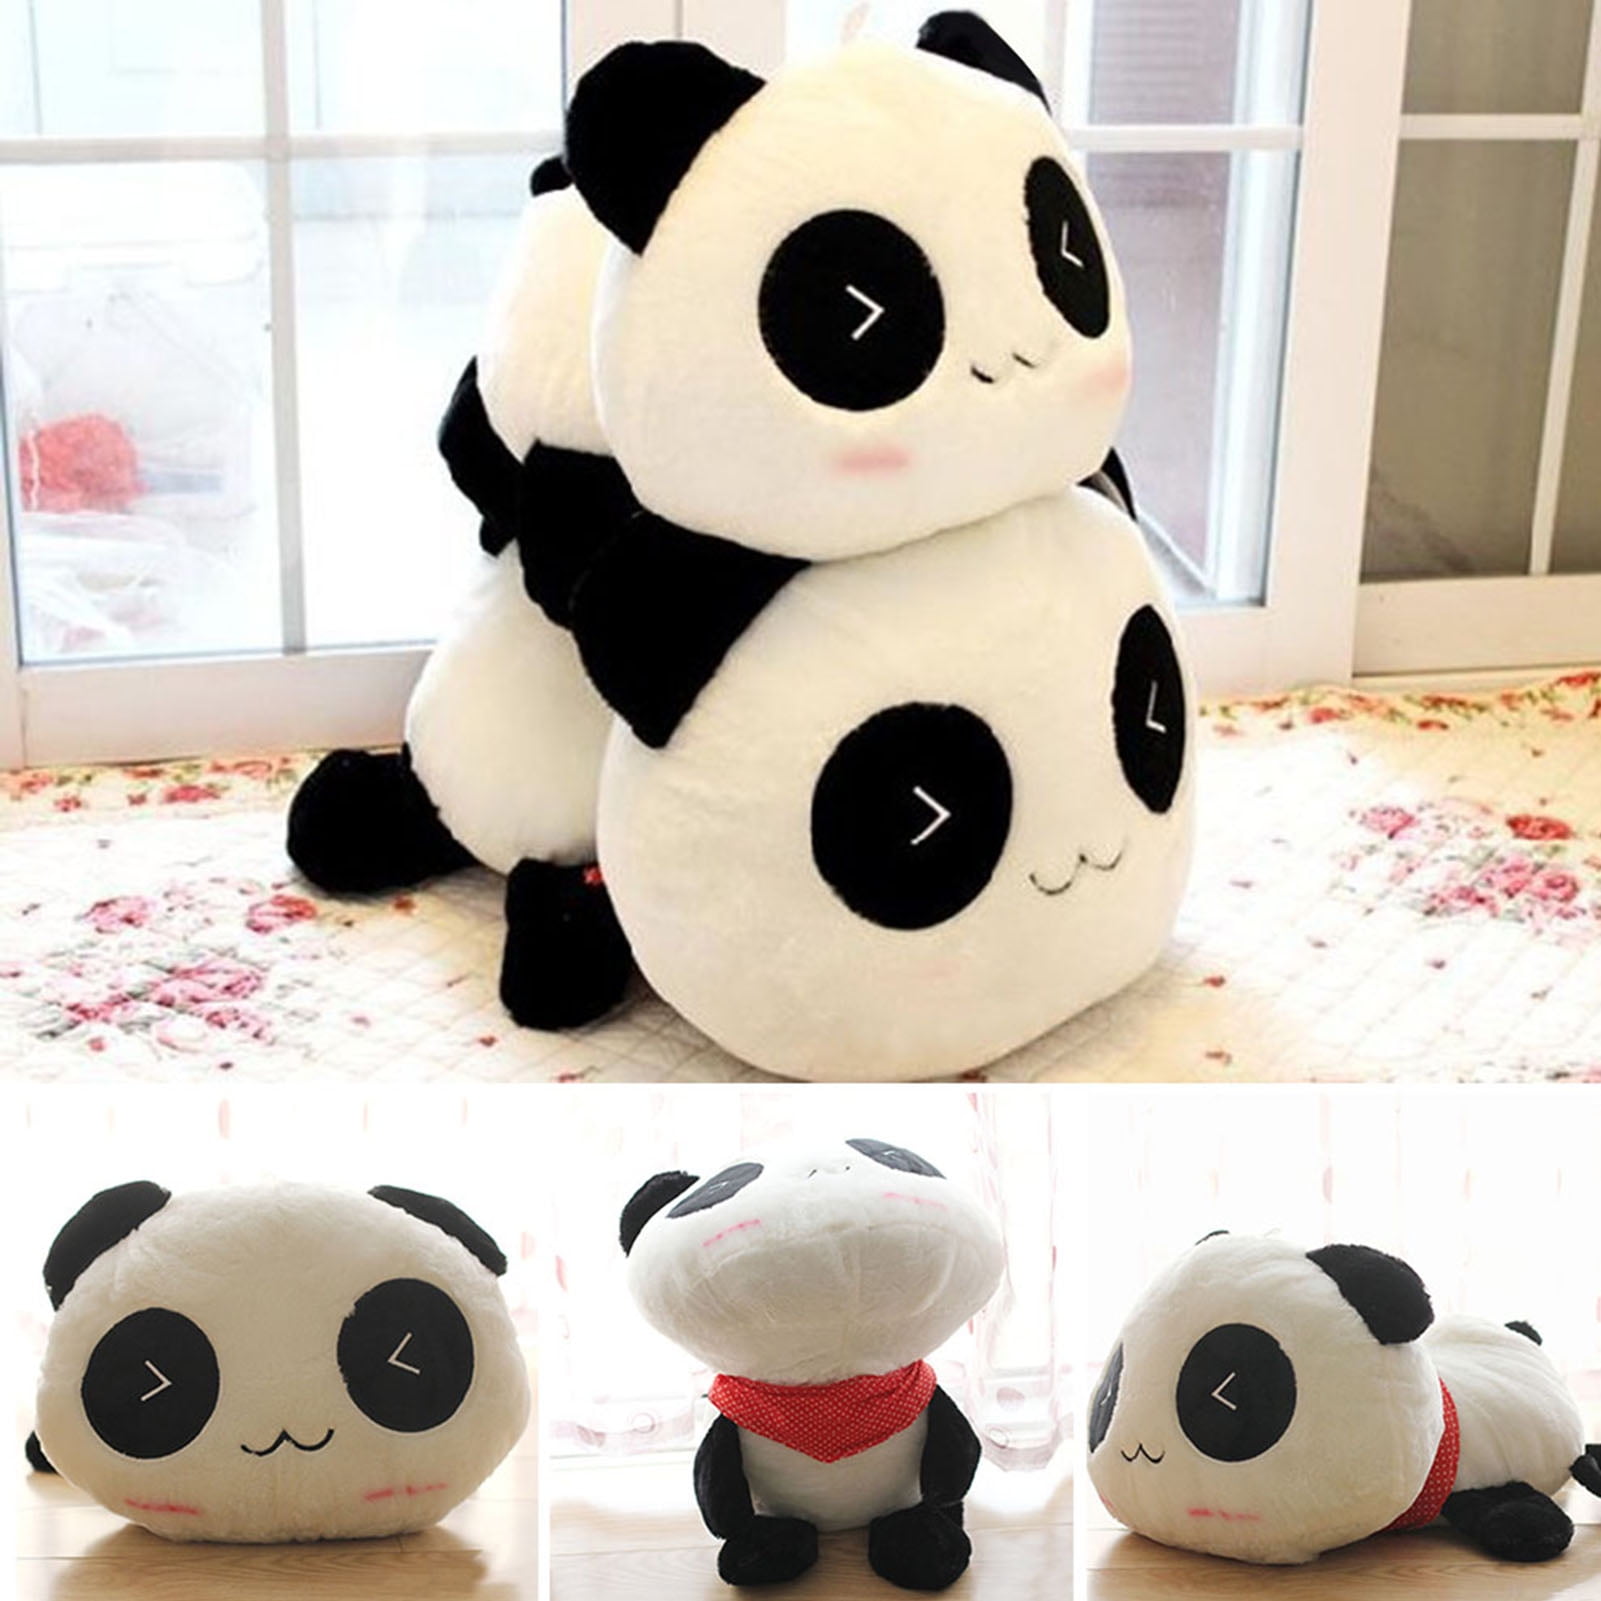 Yirtree 14 inch Cute Panda Plush Stuffed Squishy Animal Cylindrical Body Pillow,Super Soft Cartoon Hugging Toy Gifts for Bedding, Kids Sleeping Kawaii